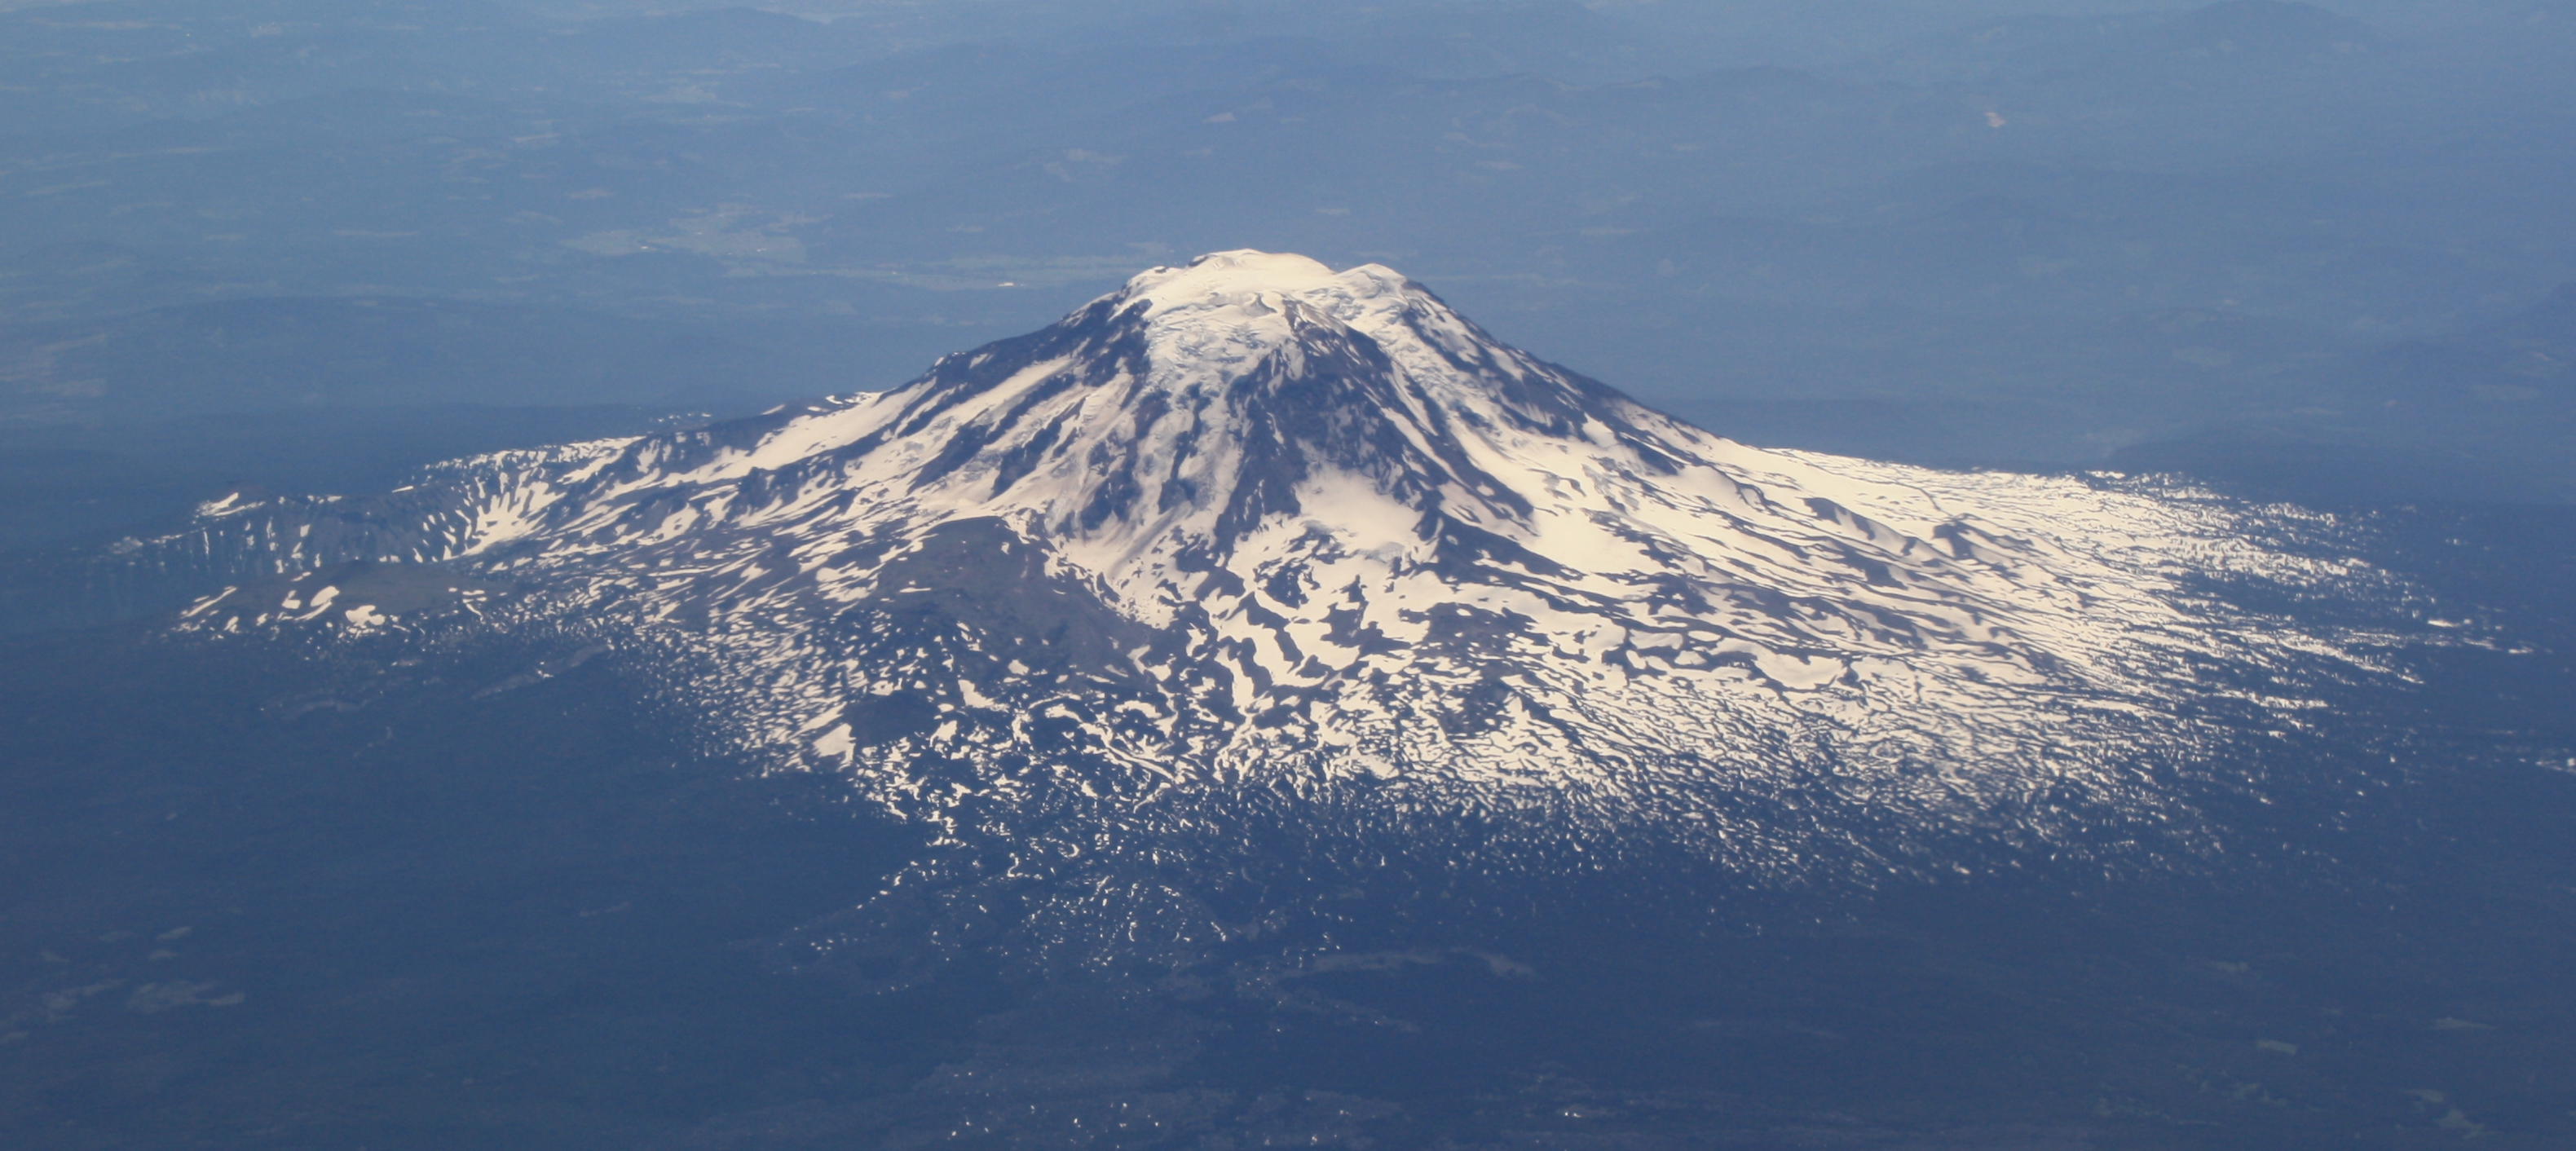 File:Mount Adams 2008 (aerial view).jpg - Wikimedia Commons